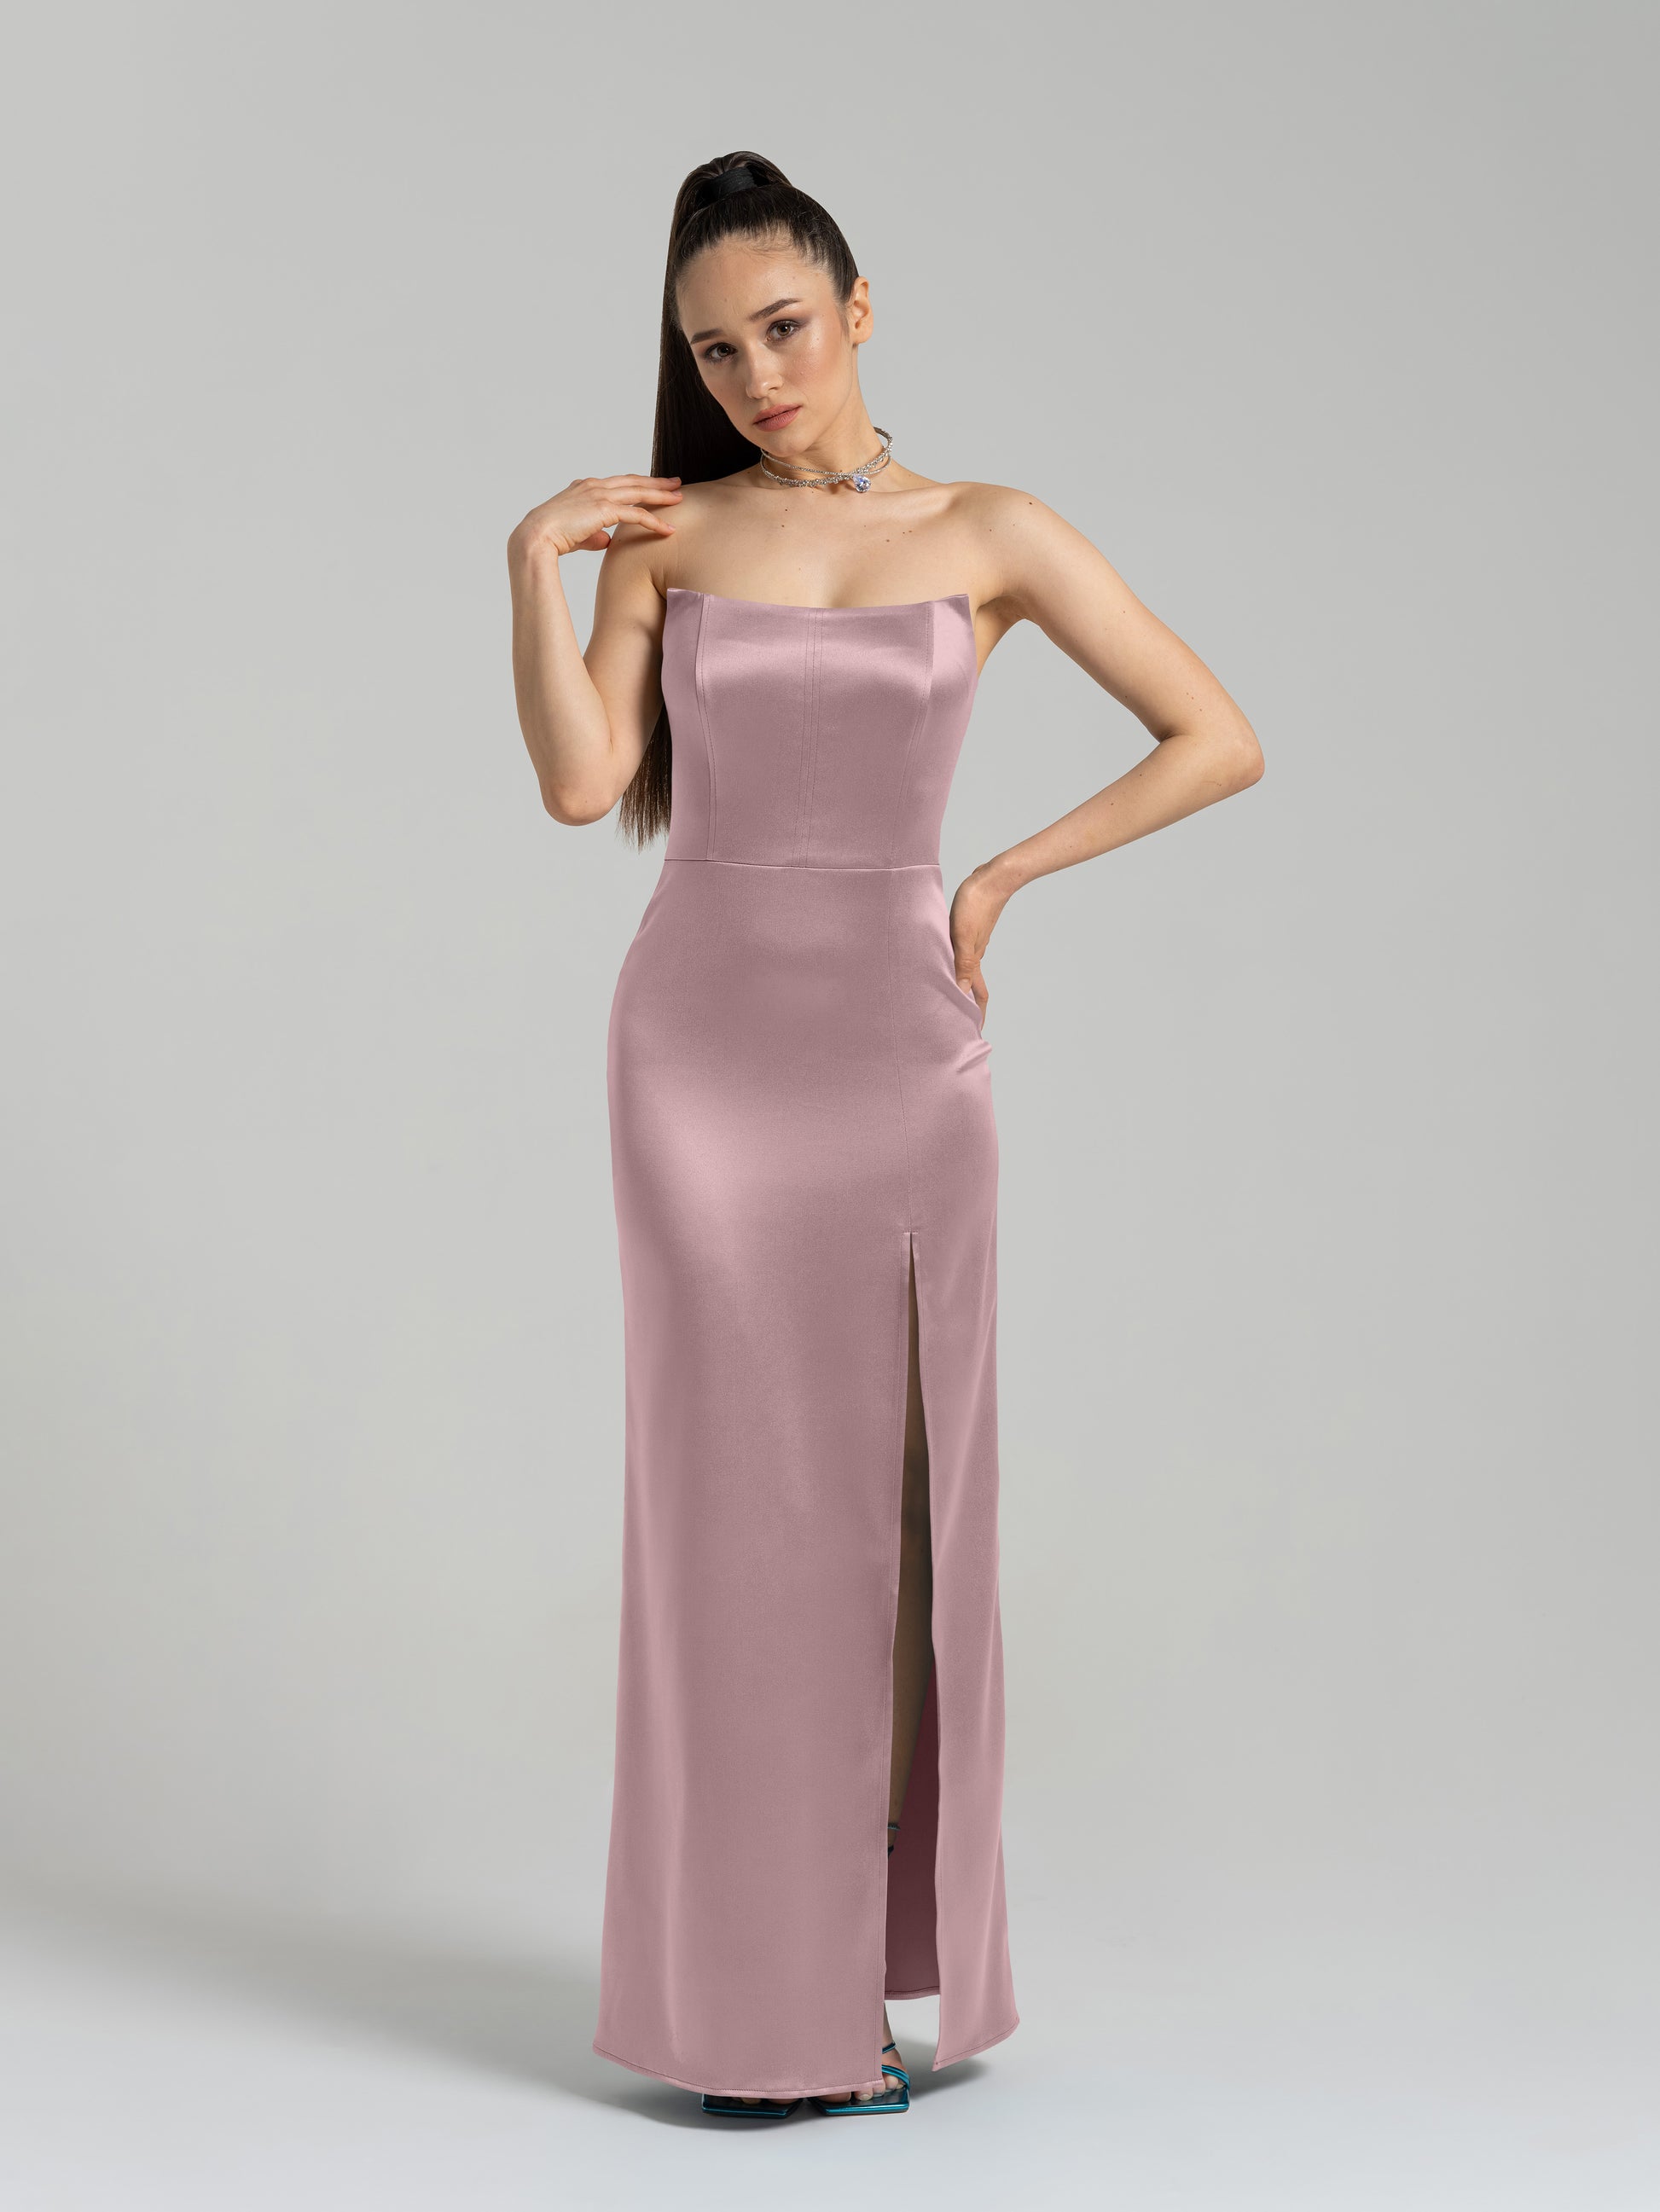 Queen of Hearts Satin Maxi Dress - Soft Pink by Tia Dorraine Women's Luxury Fashion Designer Clothing Brand